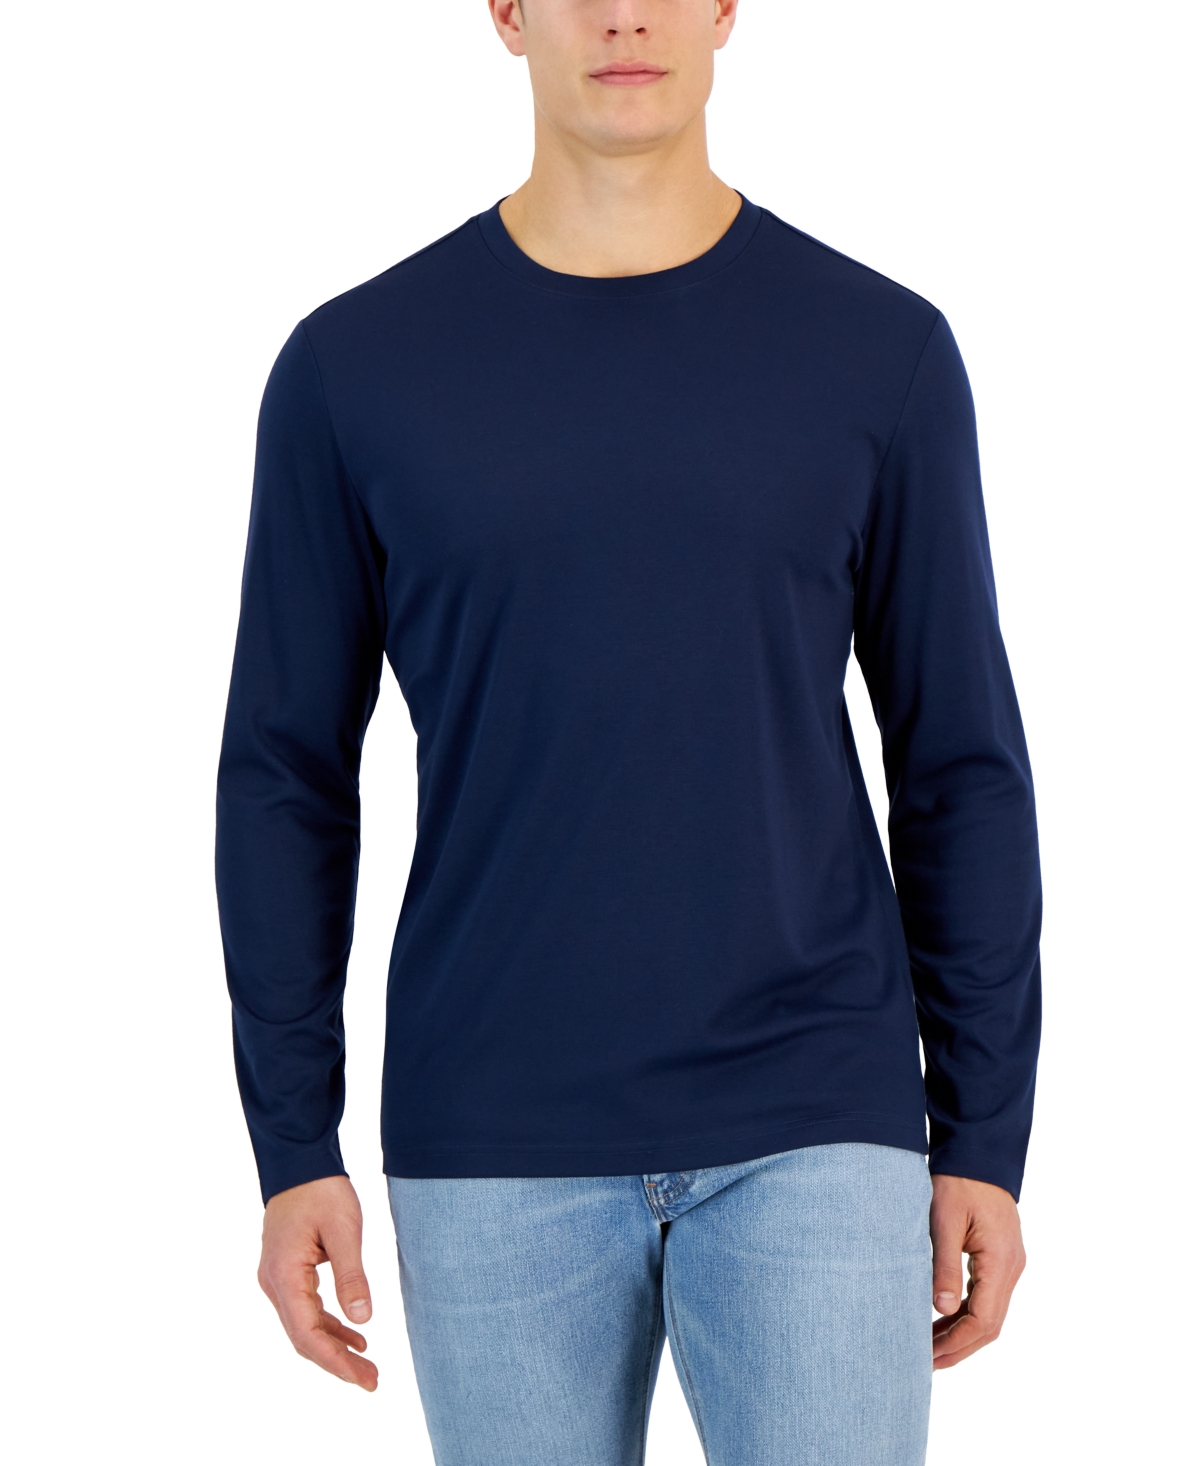 Alfani Alfatech Long Sleeve Crewneck T-shirt, Created For Macy's In Neo Navy